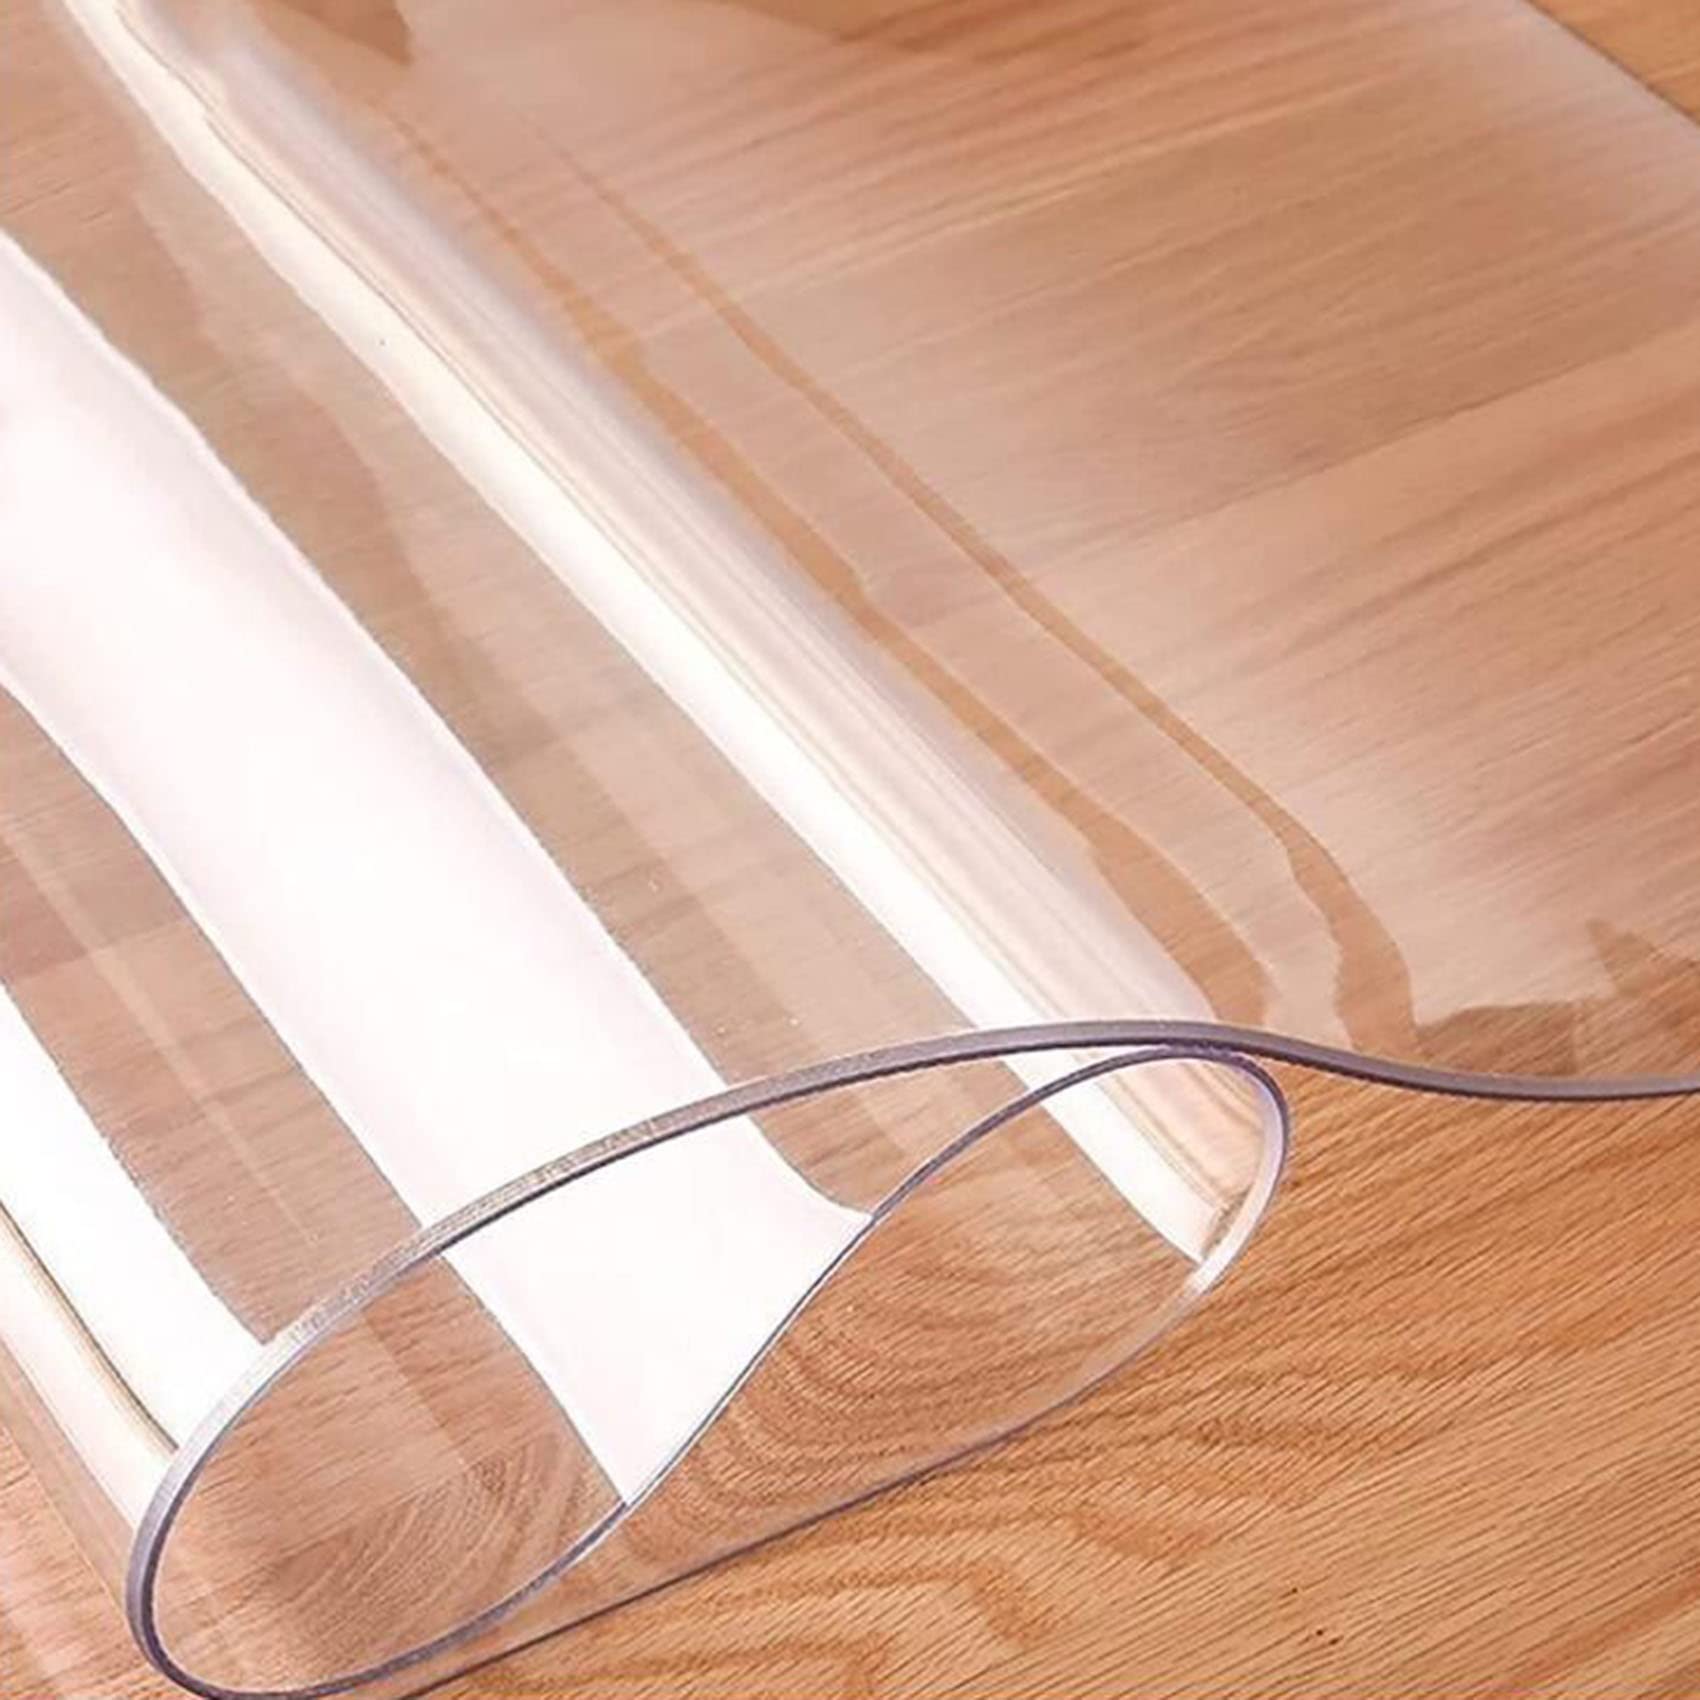 Clear PVC Desk Chair Mat Transparent Carpet Hallway Hardwood Floors Mat,Area Rugs Clear Vinyl Plastic Floor Runner Protector, Carpet Protector for Home/Office/Hall/Low Pile Rugs Doormat-70cm/90cm/110c